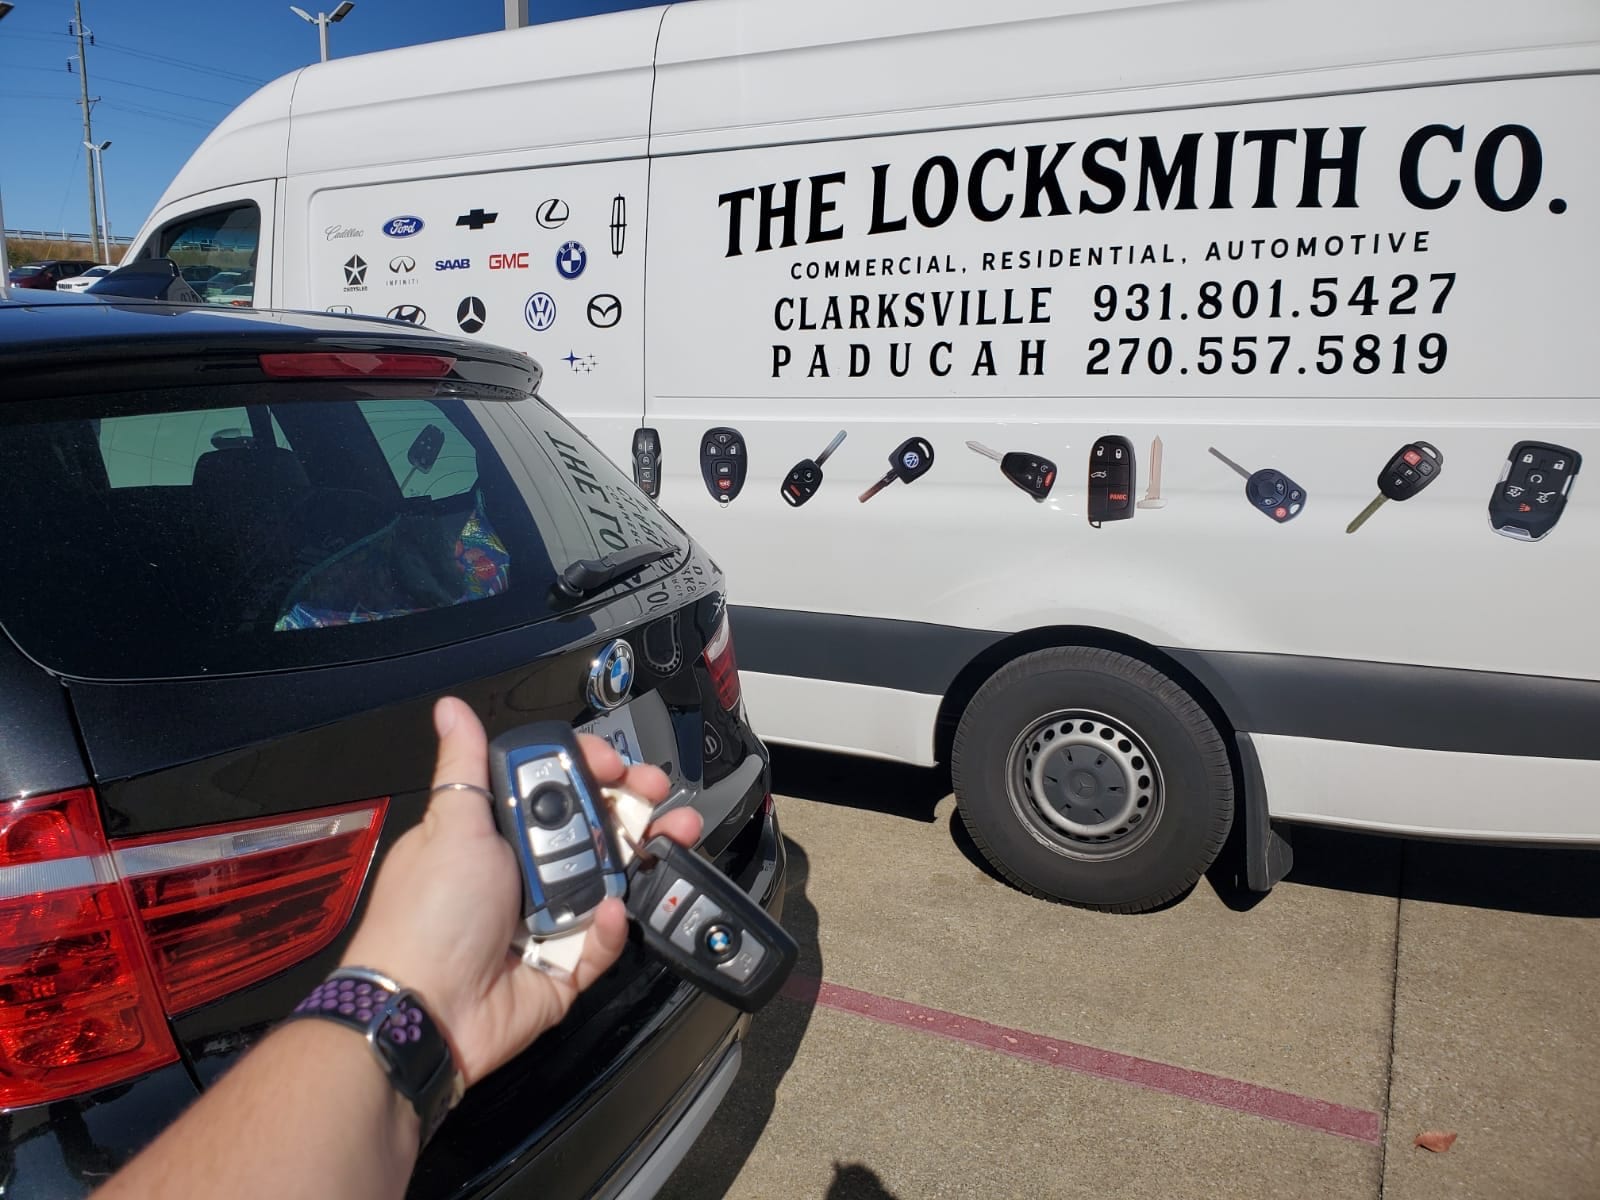 The Locksmith Company Van for car key FOB programming in Clarksville TN